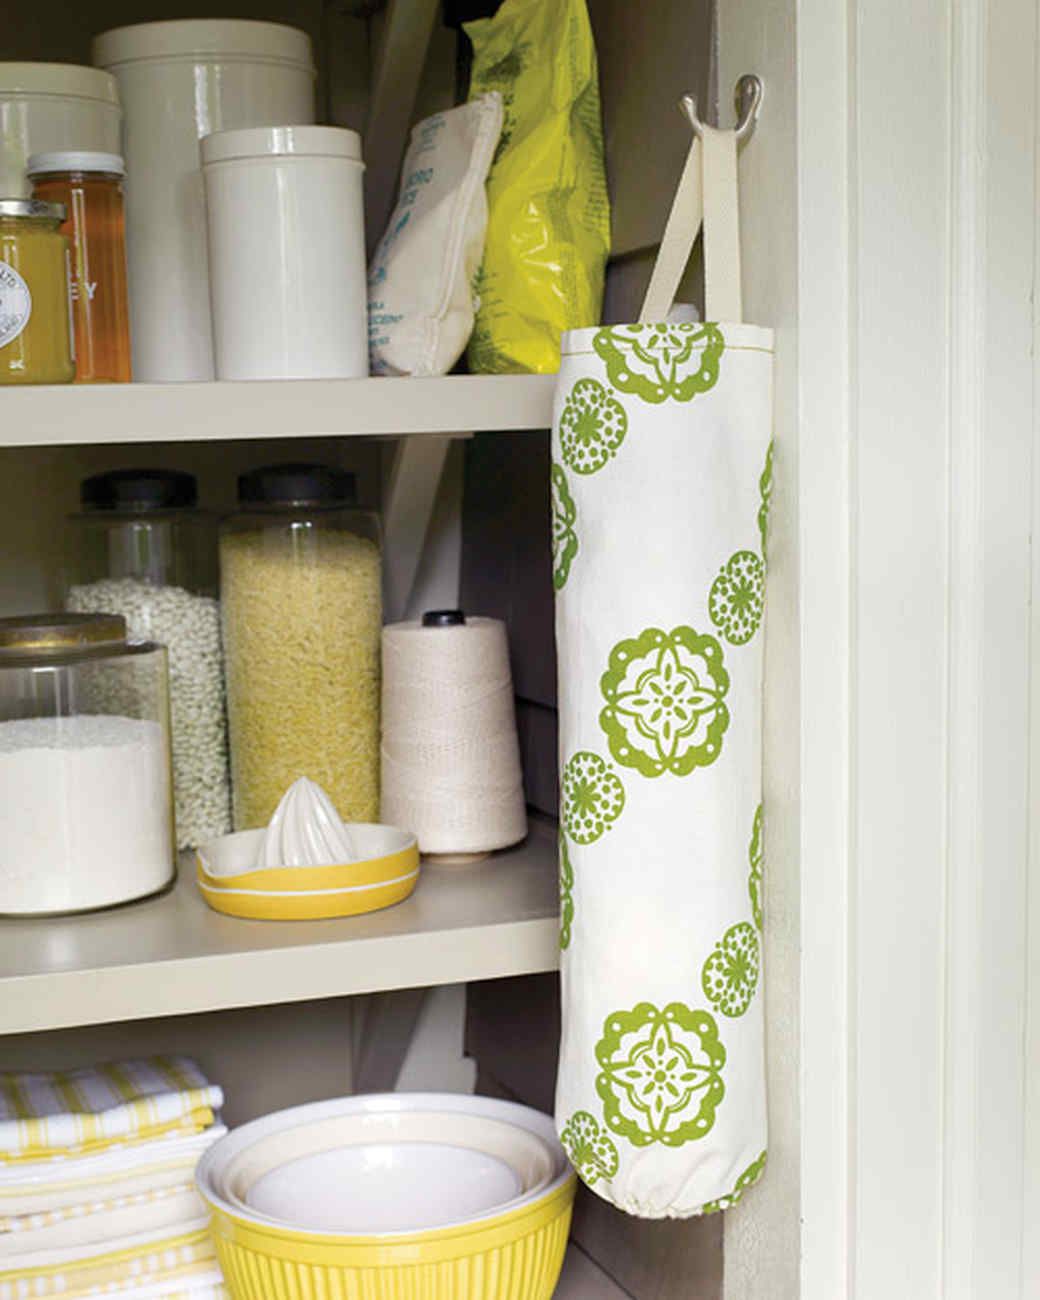 Home Design Homemade Towel /& Fabric Plastic Grocery Bag Holder